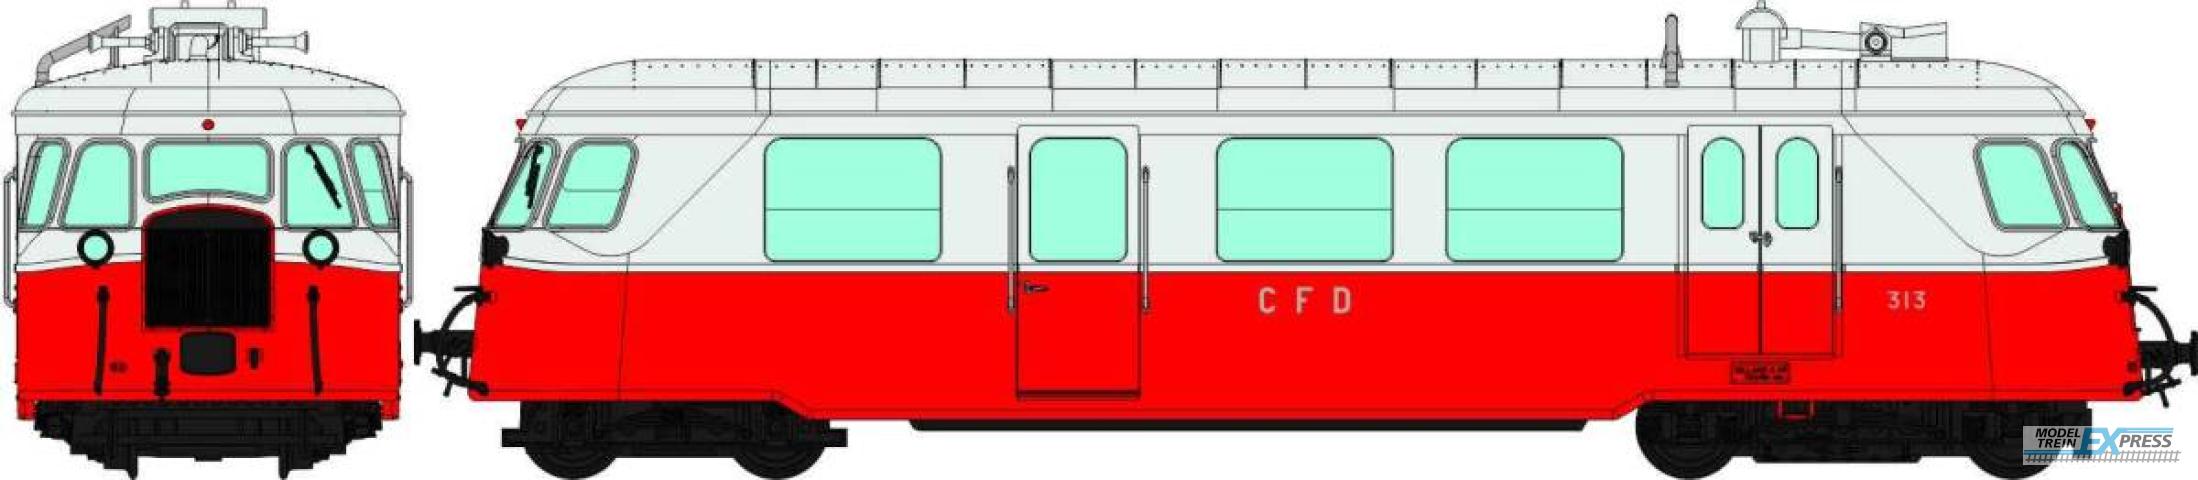 REE models VM-001 BILLARD Railcar CFD N°313, 2 Lights, Red/Cream Era III - ANALOG